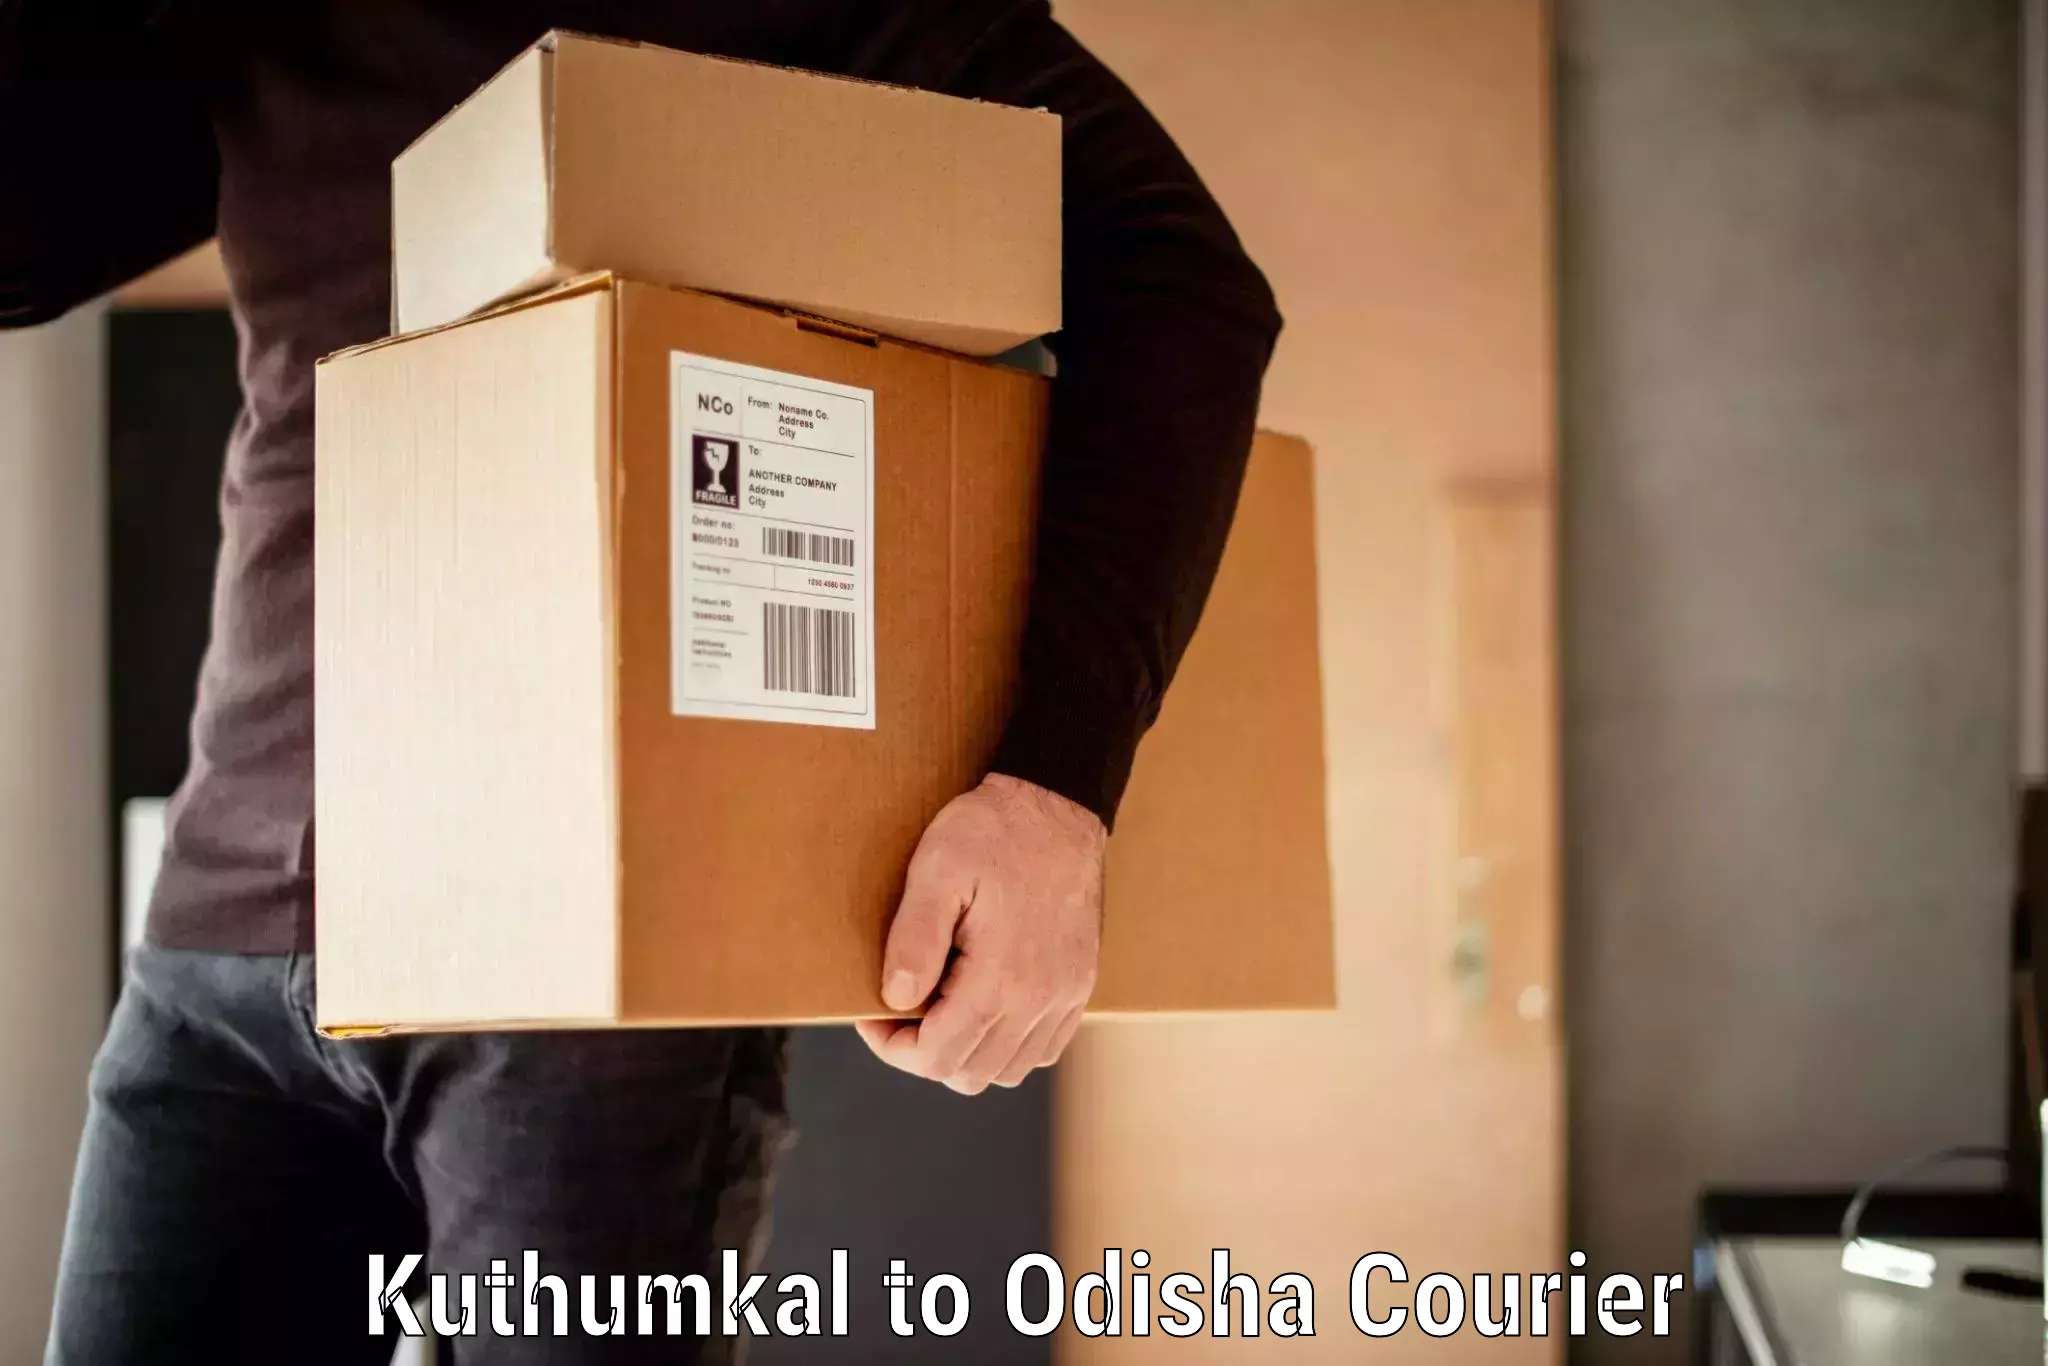 Baggage relocation service Kuthumkal to Bhubaneswar